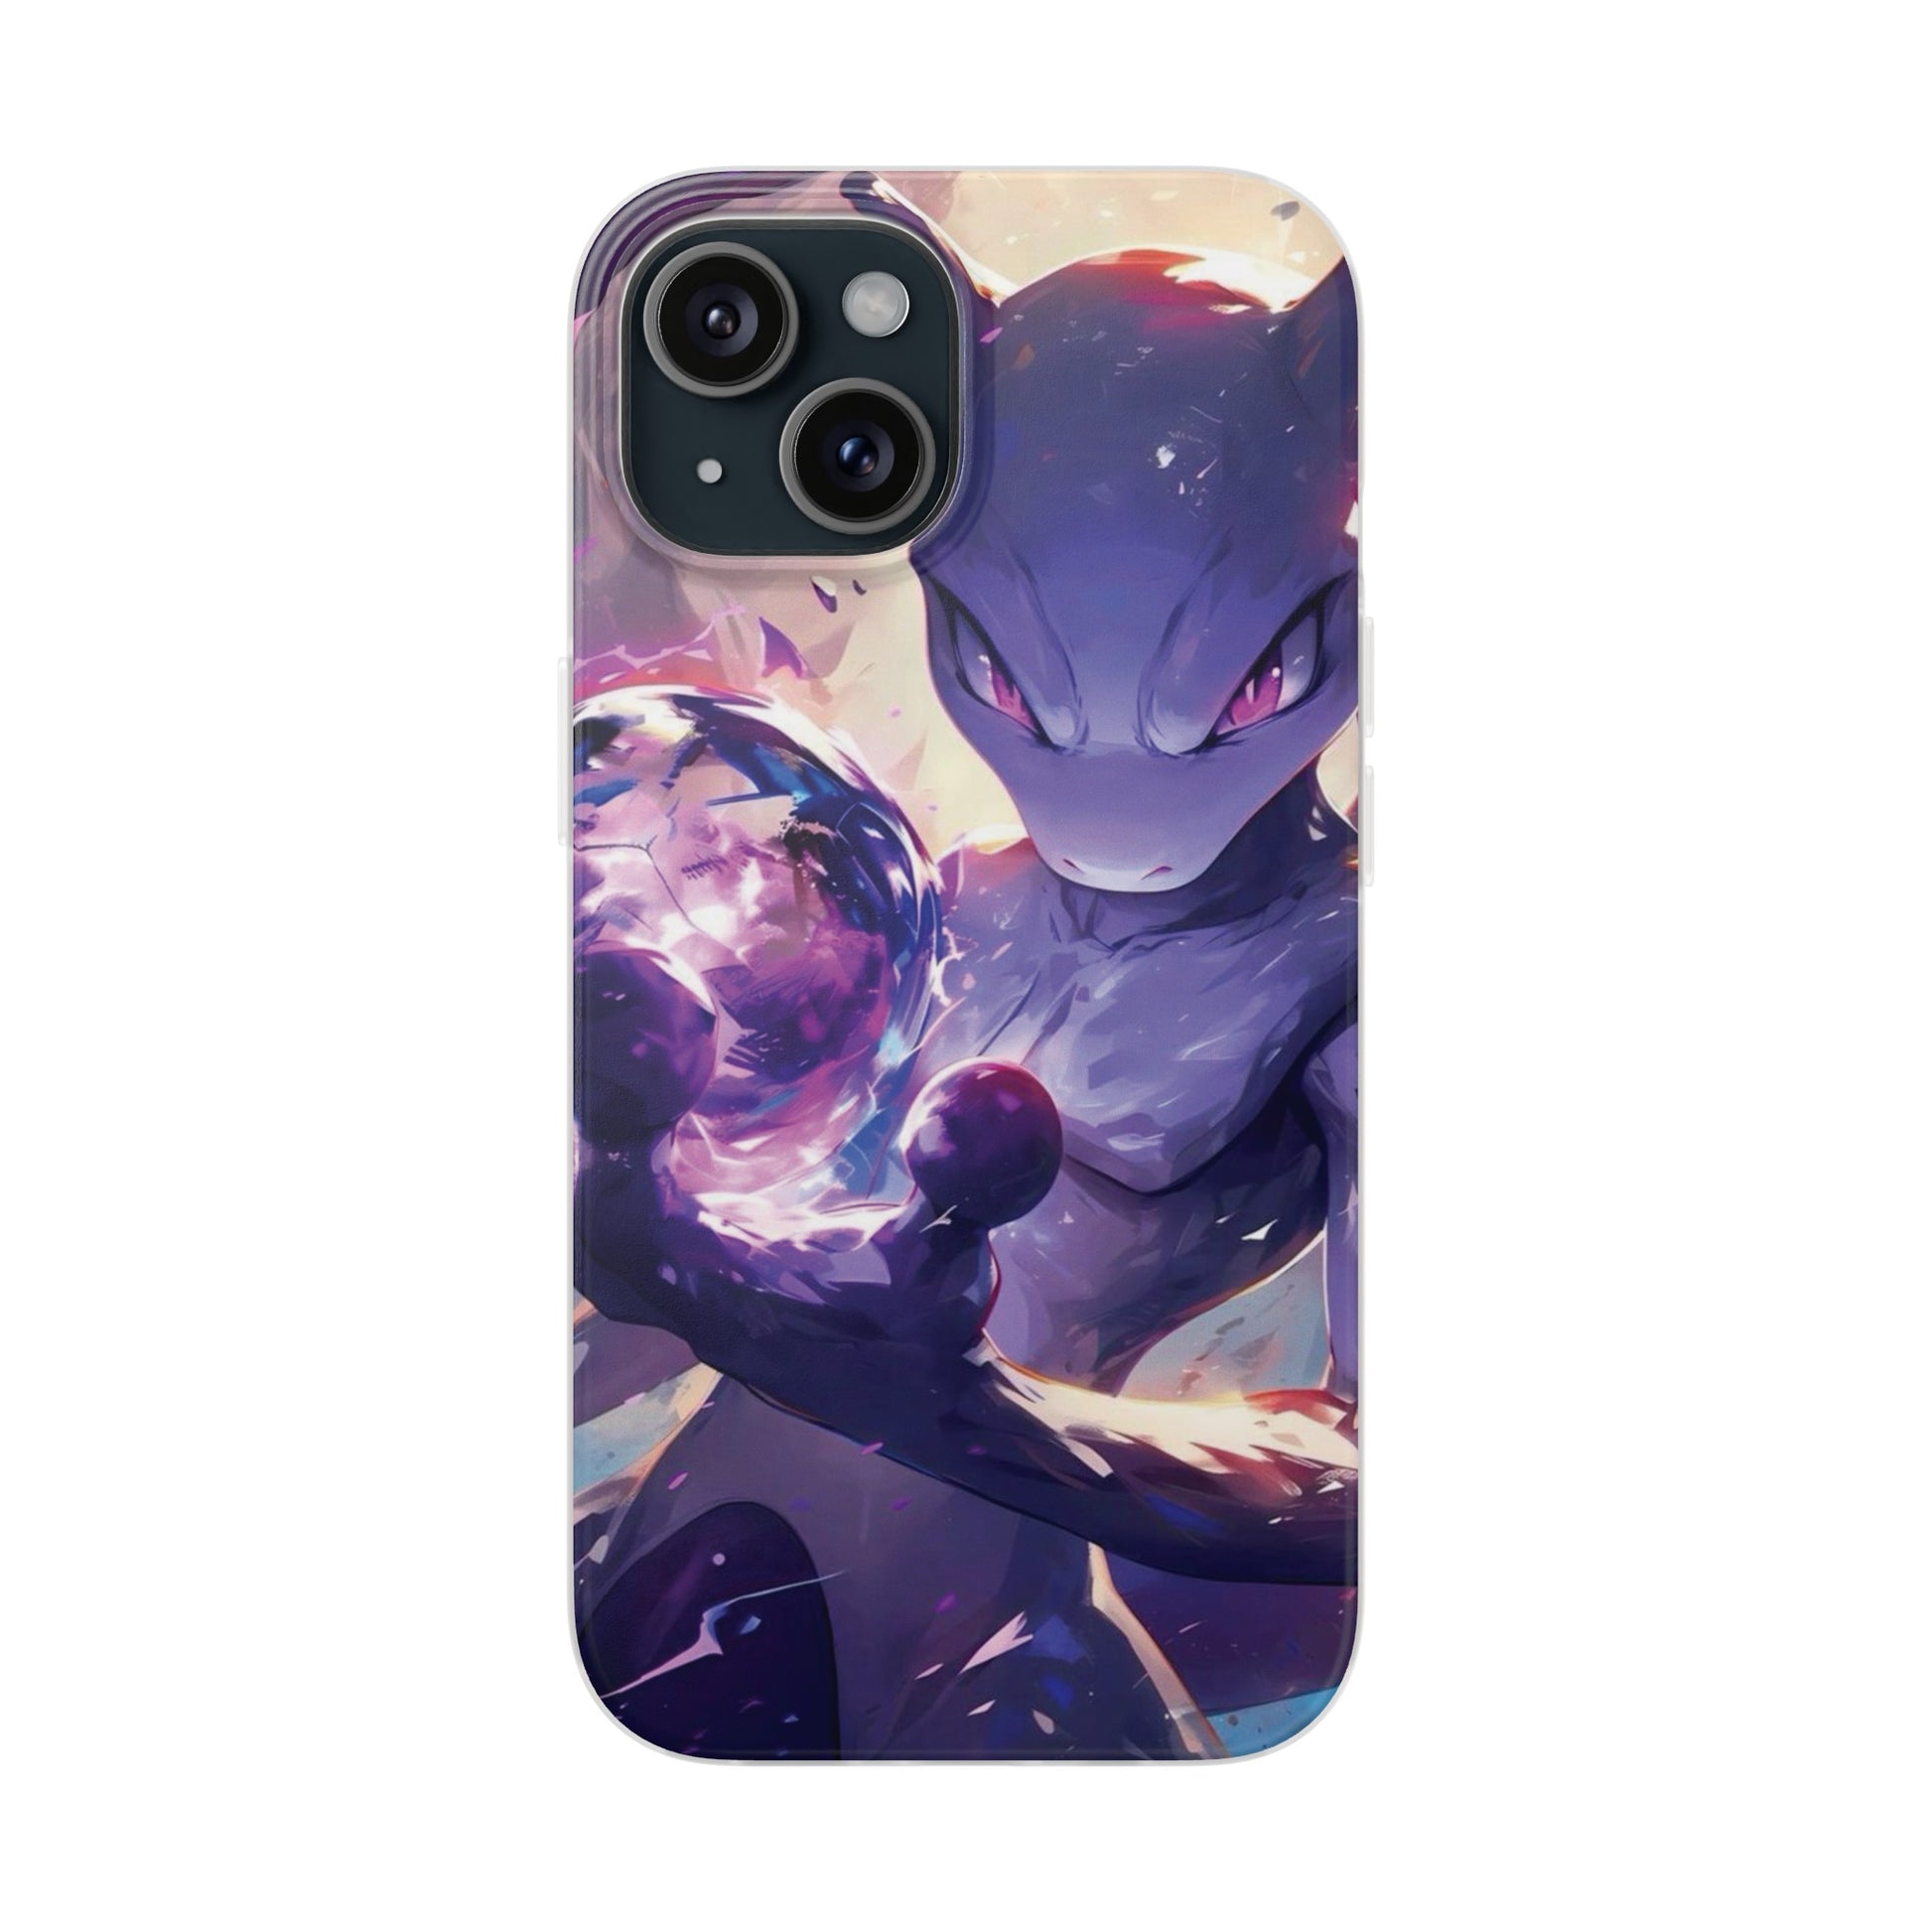 Pokemon Mewtwo Cool iPhone Phone Case